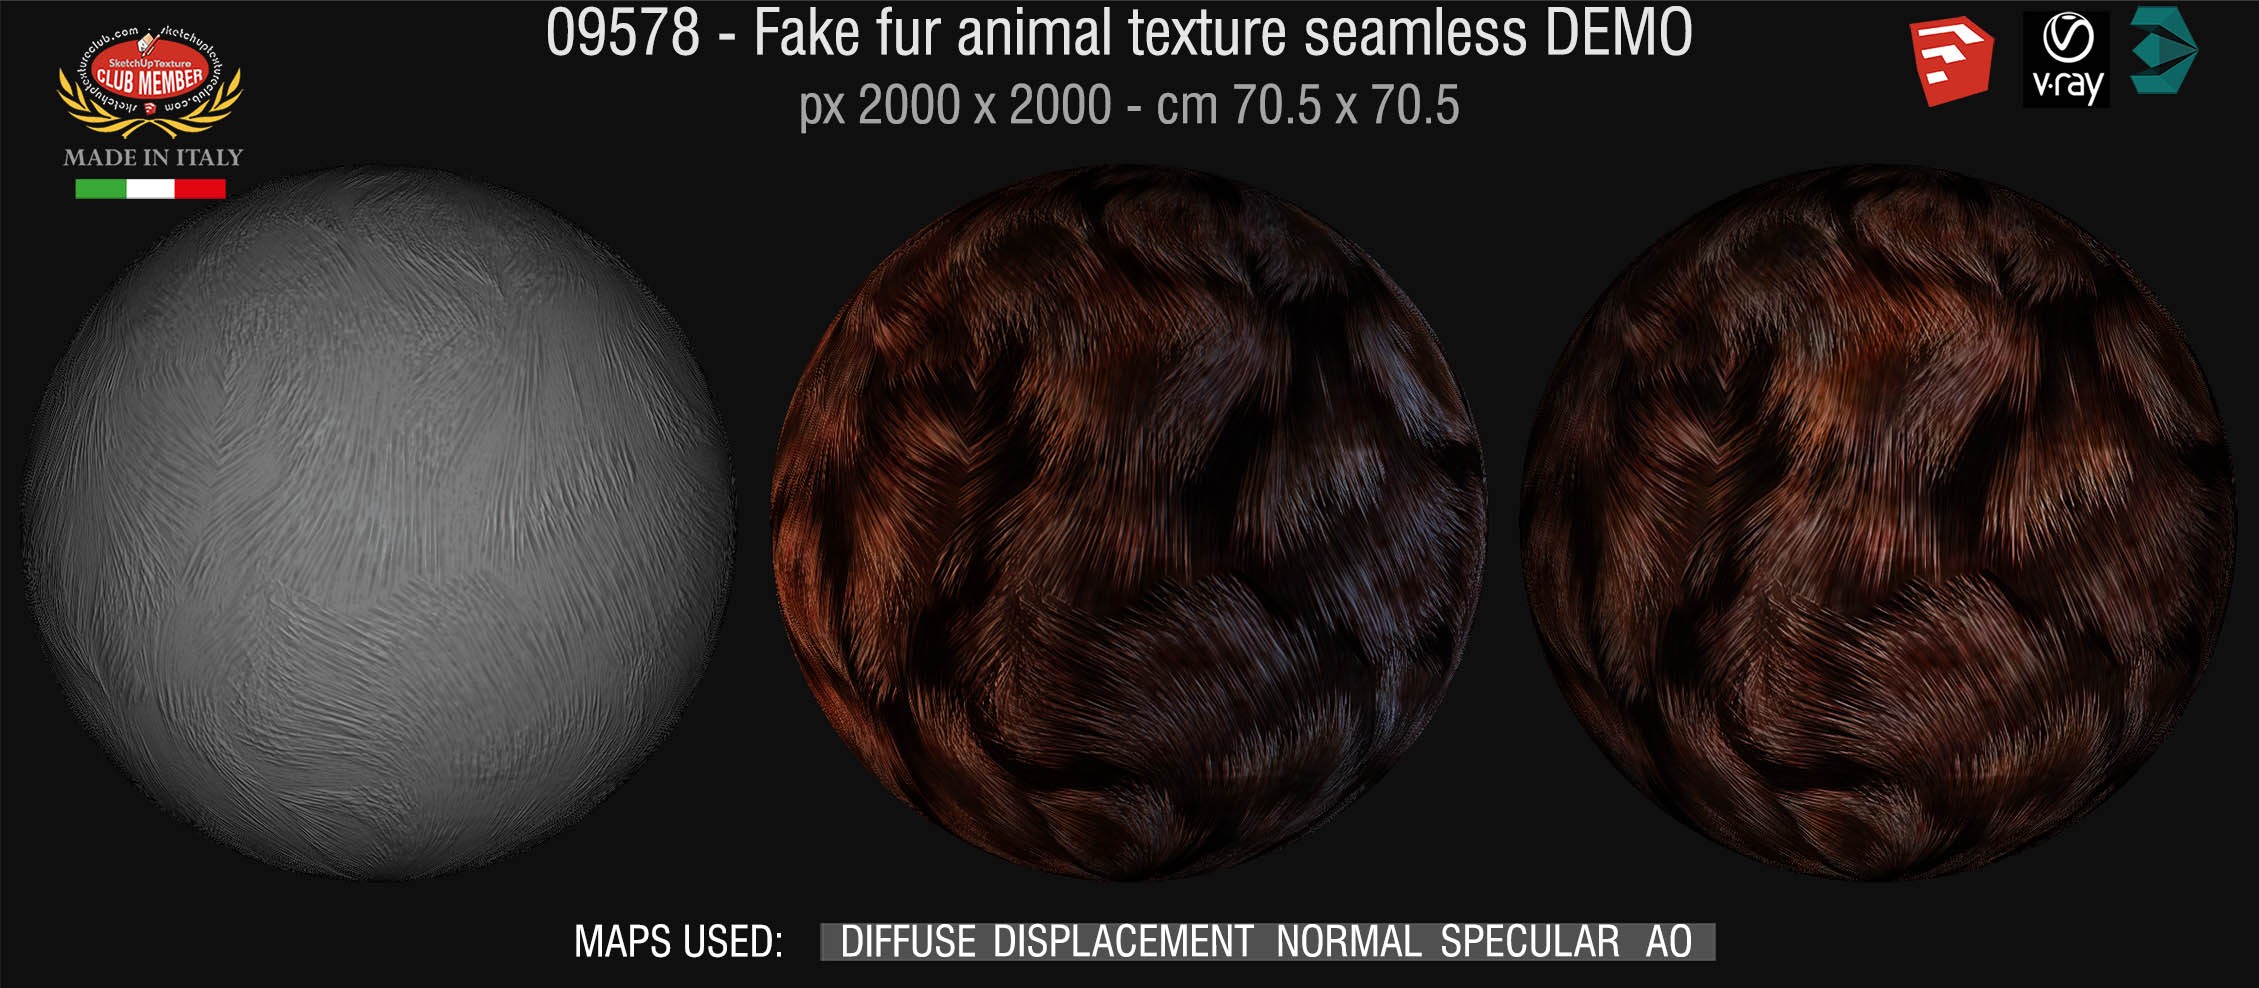 09578 HR fake fur animal texture seamless + maps DEMO